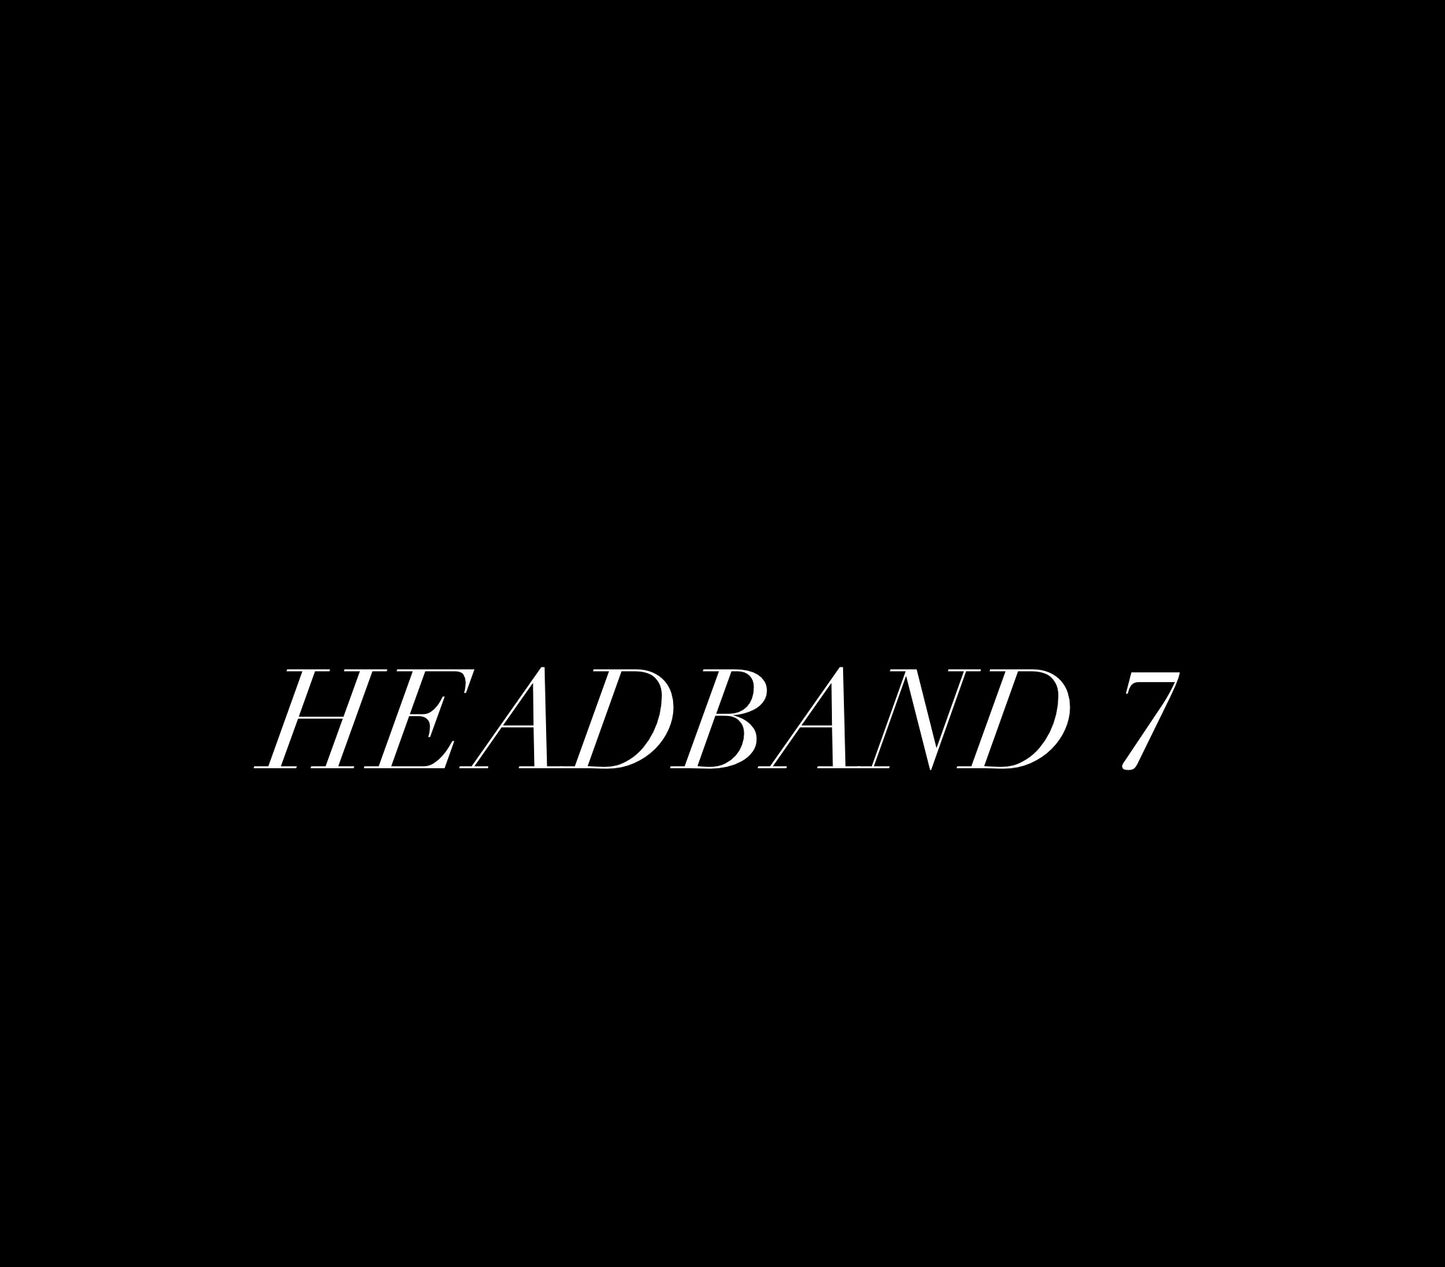 Headband 7